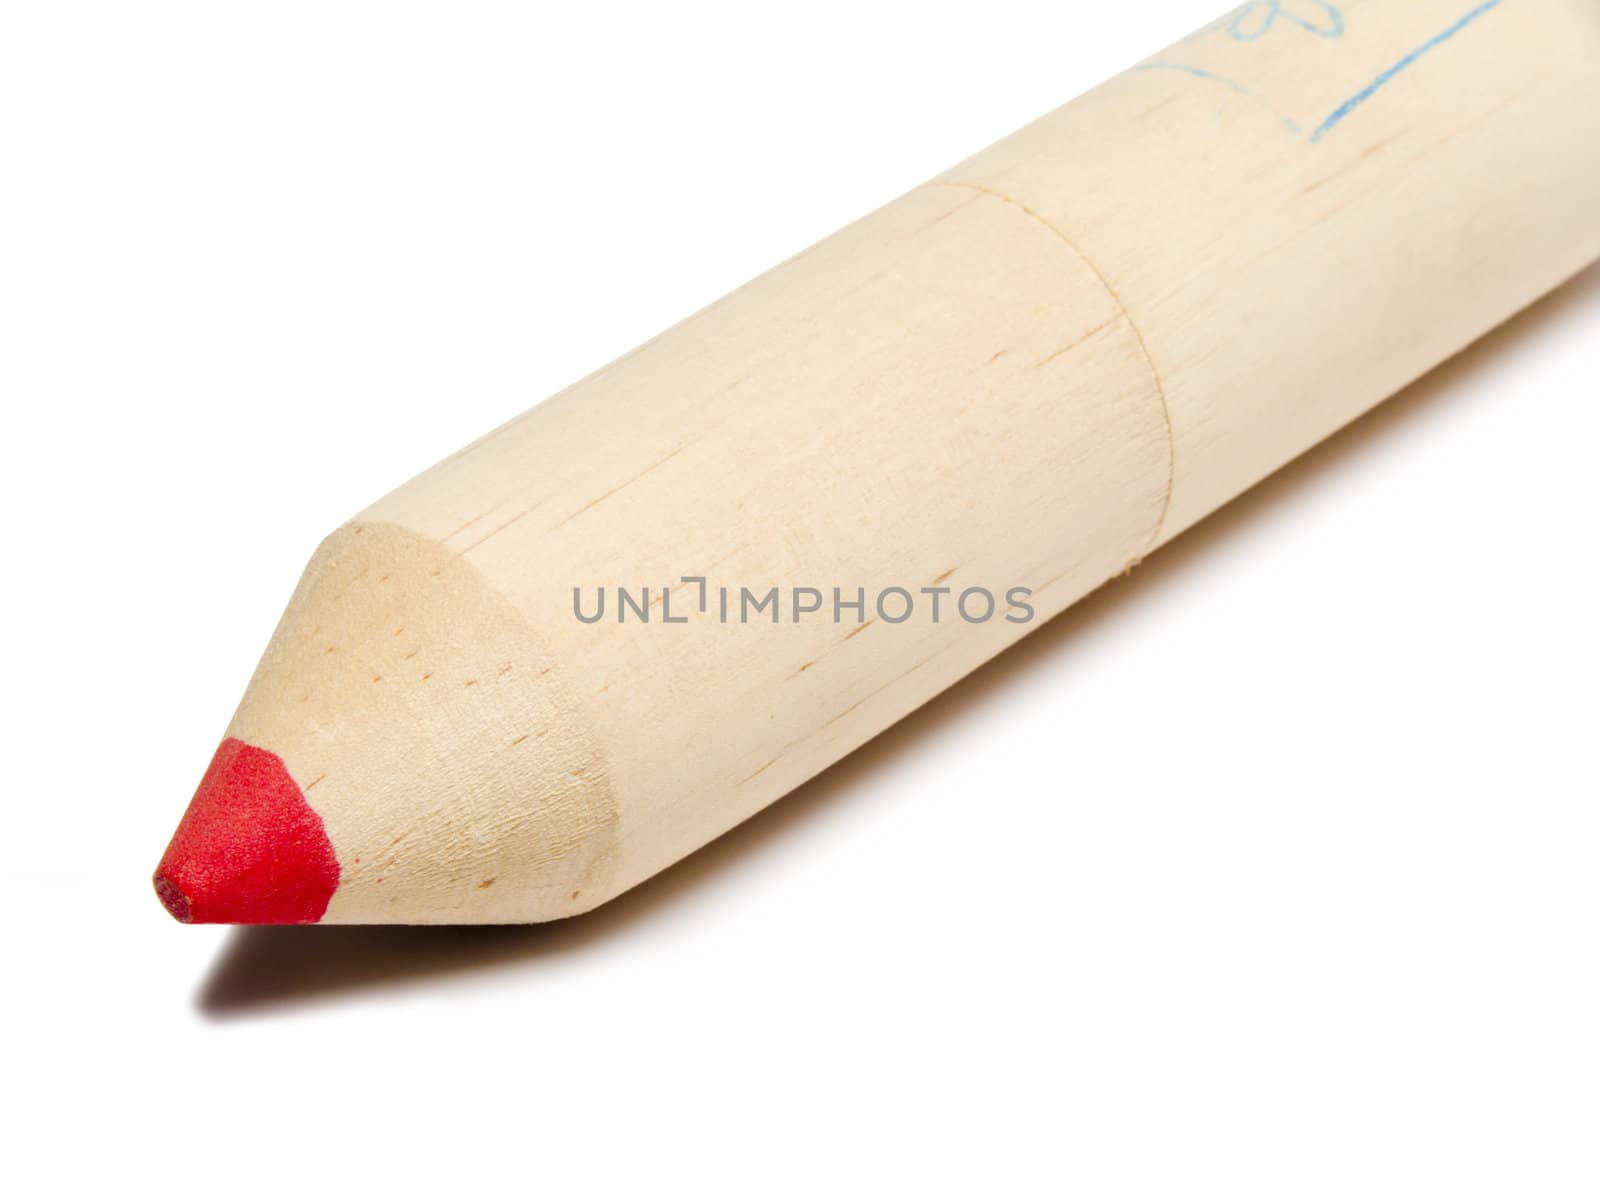 Red Pencil by devulderj